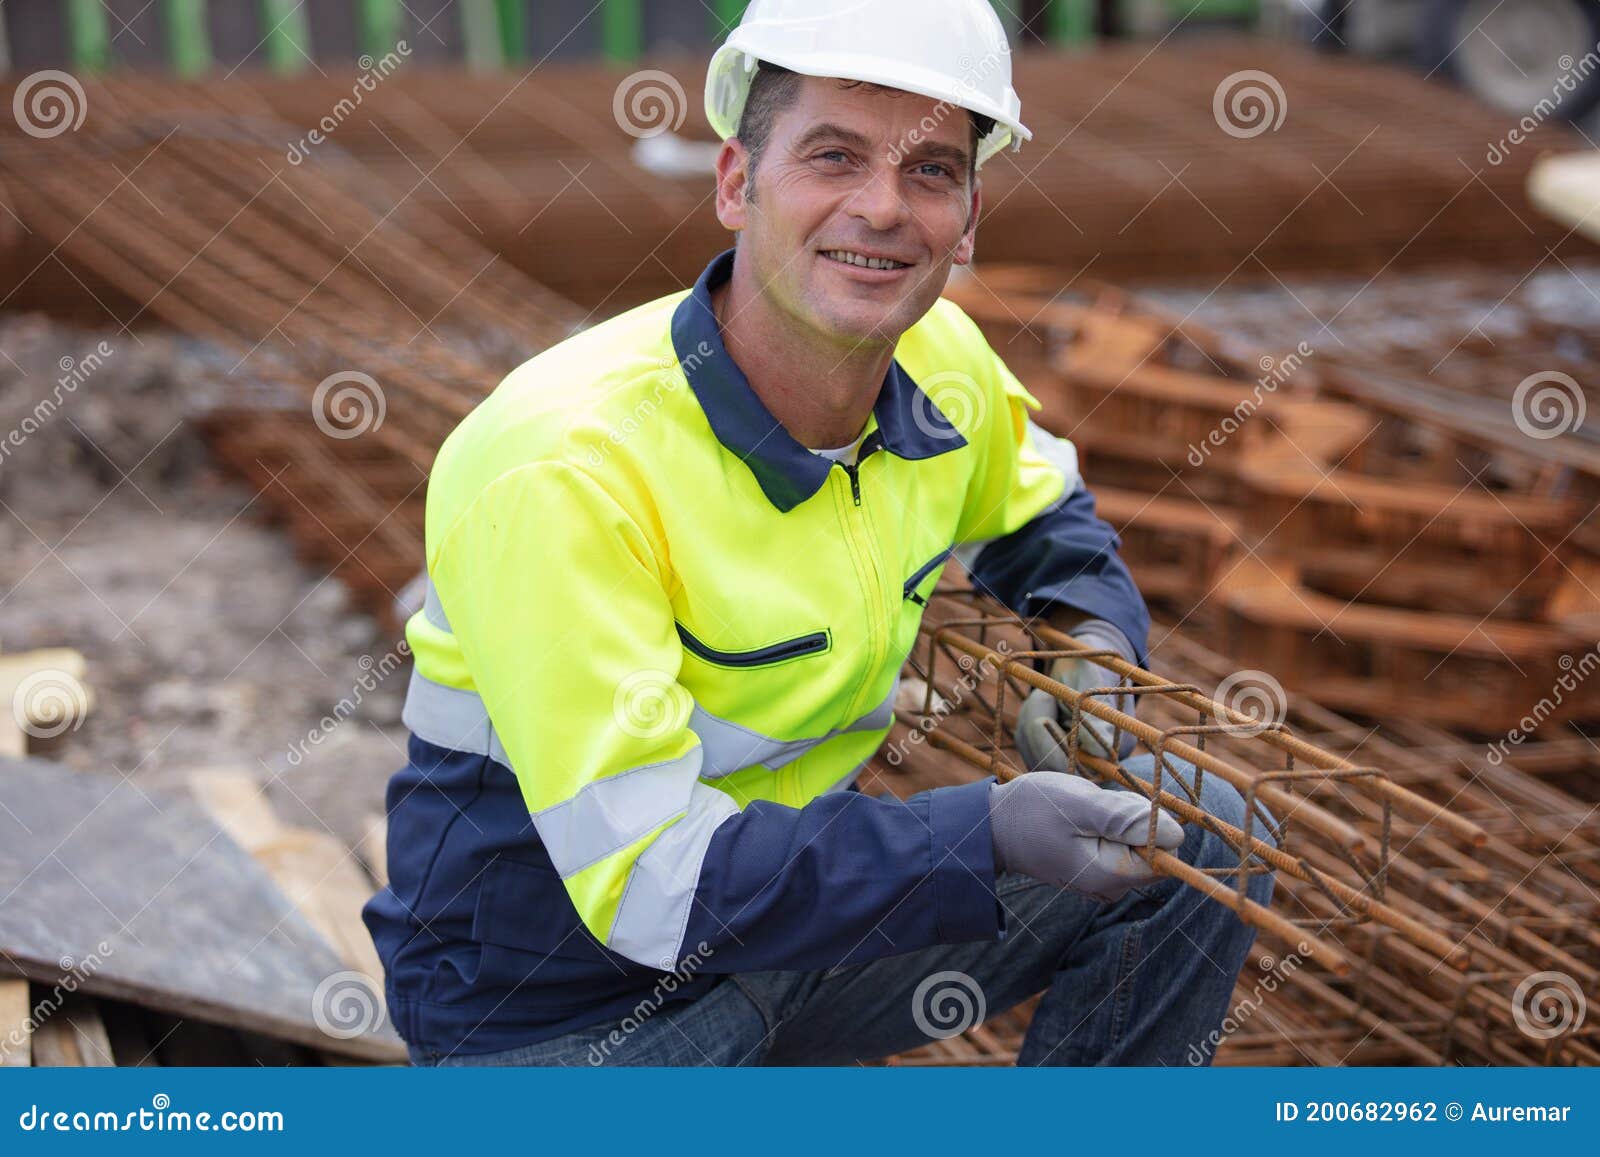 construction worker at construction site assembling falsework